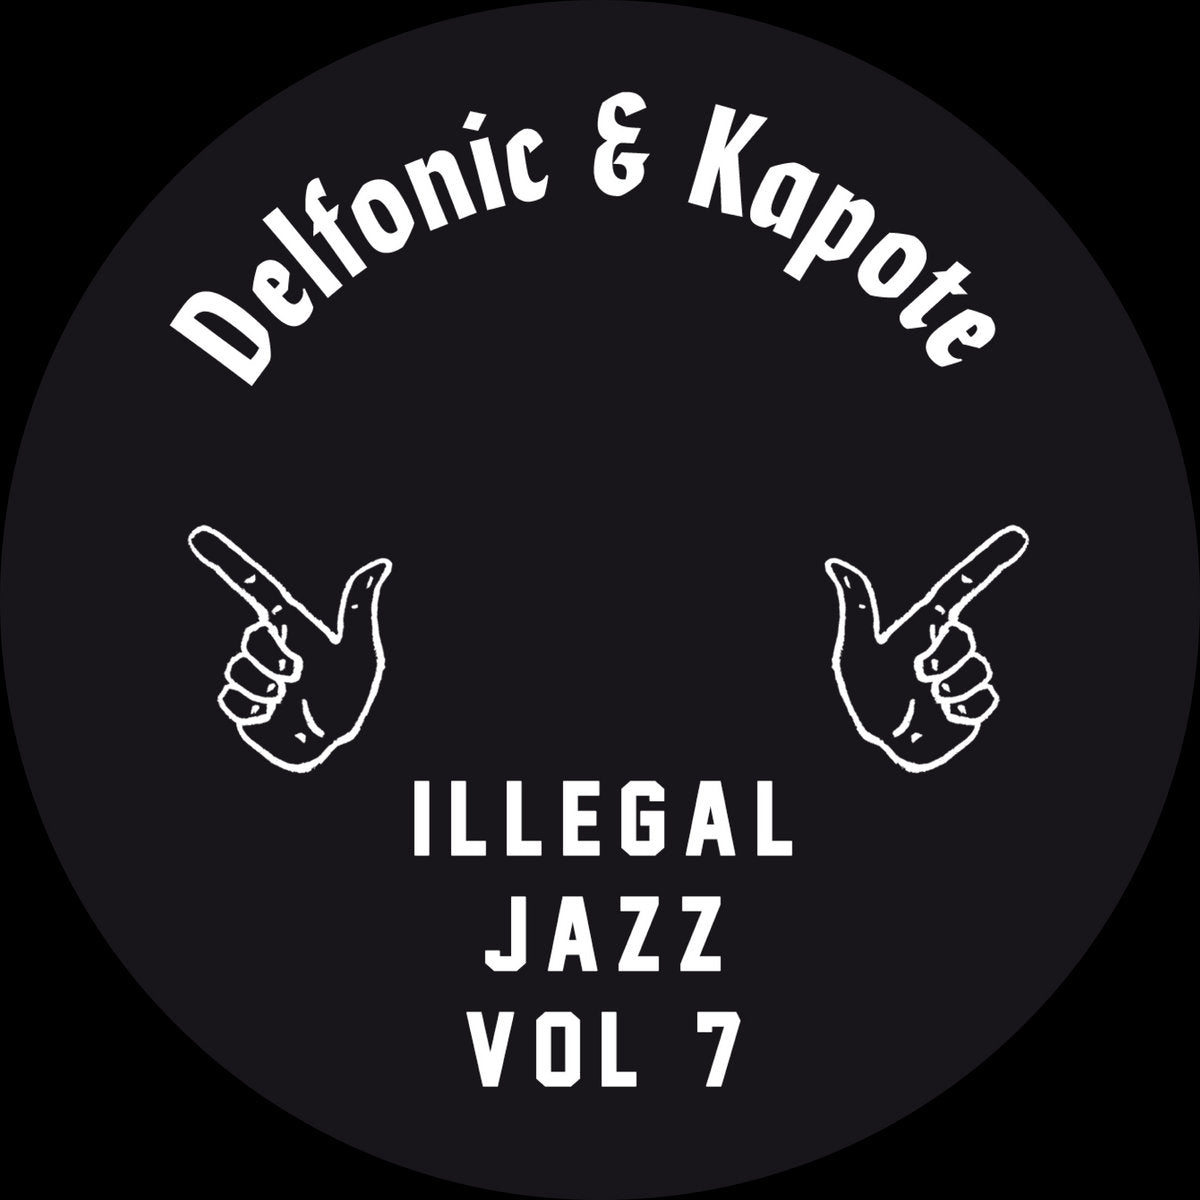 Delfonic & Kapote - Illegal Jazz Vol. 7